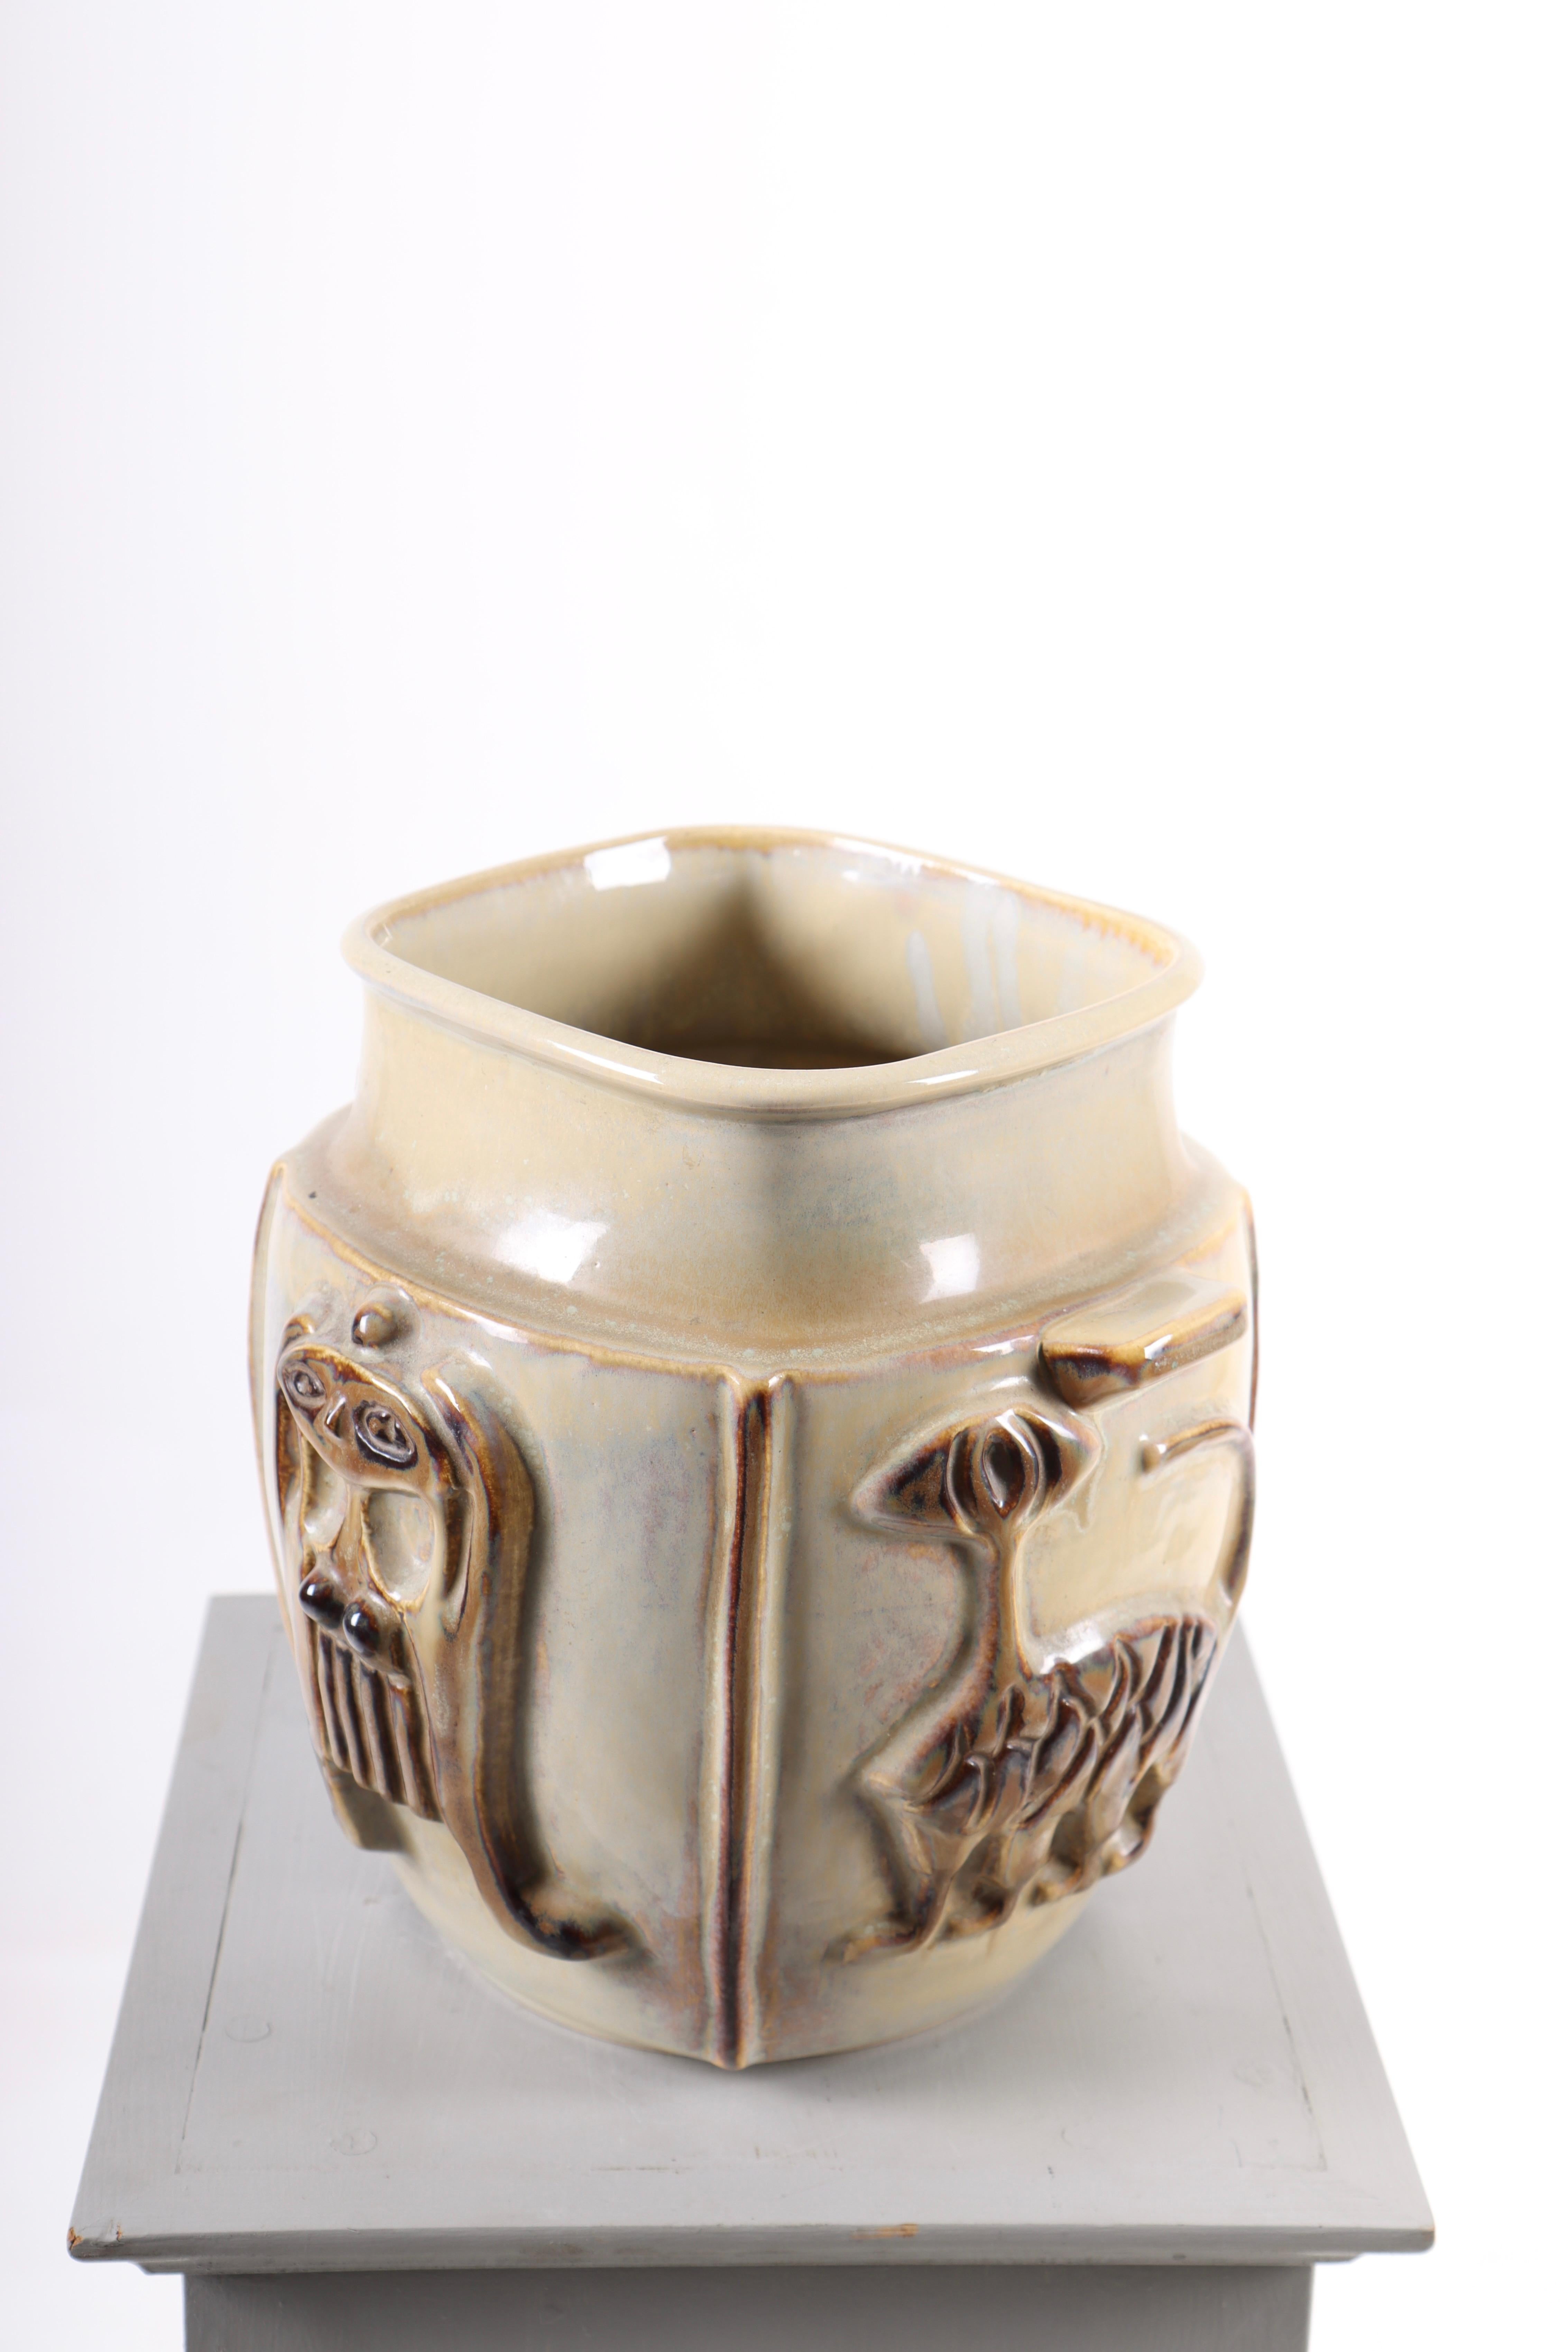 Scandinavian Modern Midcentury Vase in Ceramic by Søholm, Denmark, 1960s For Sale